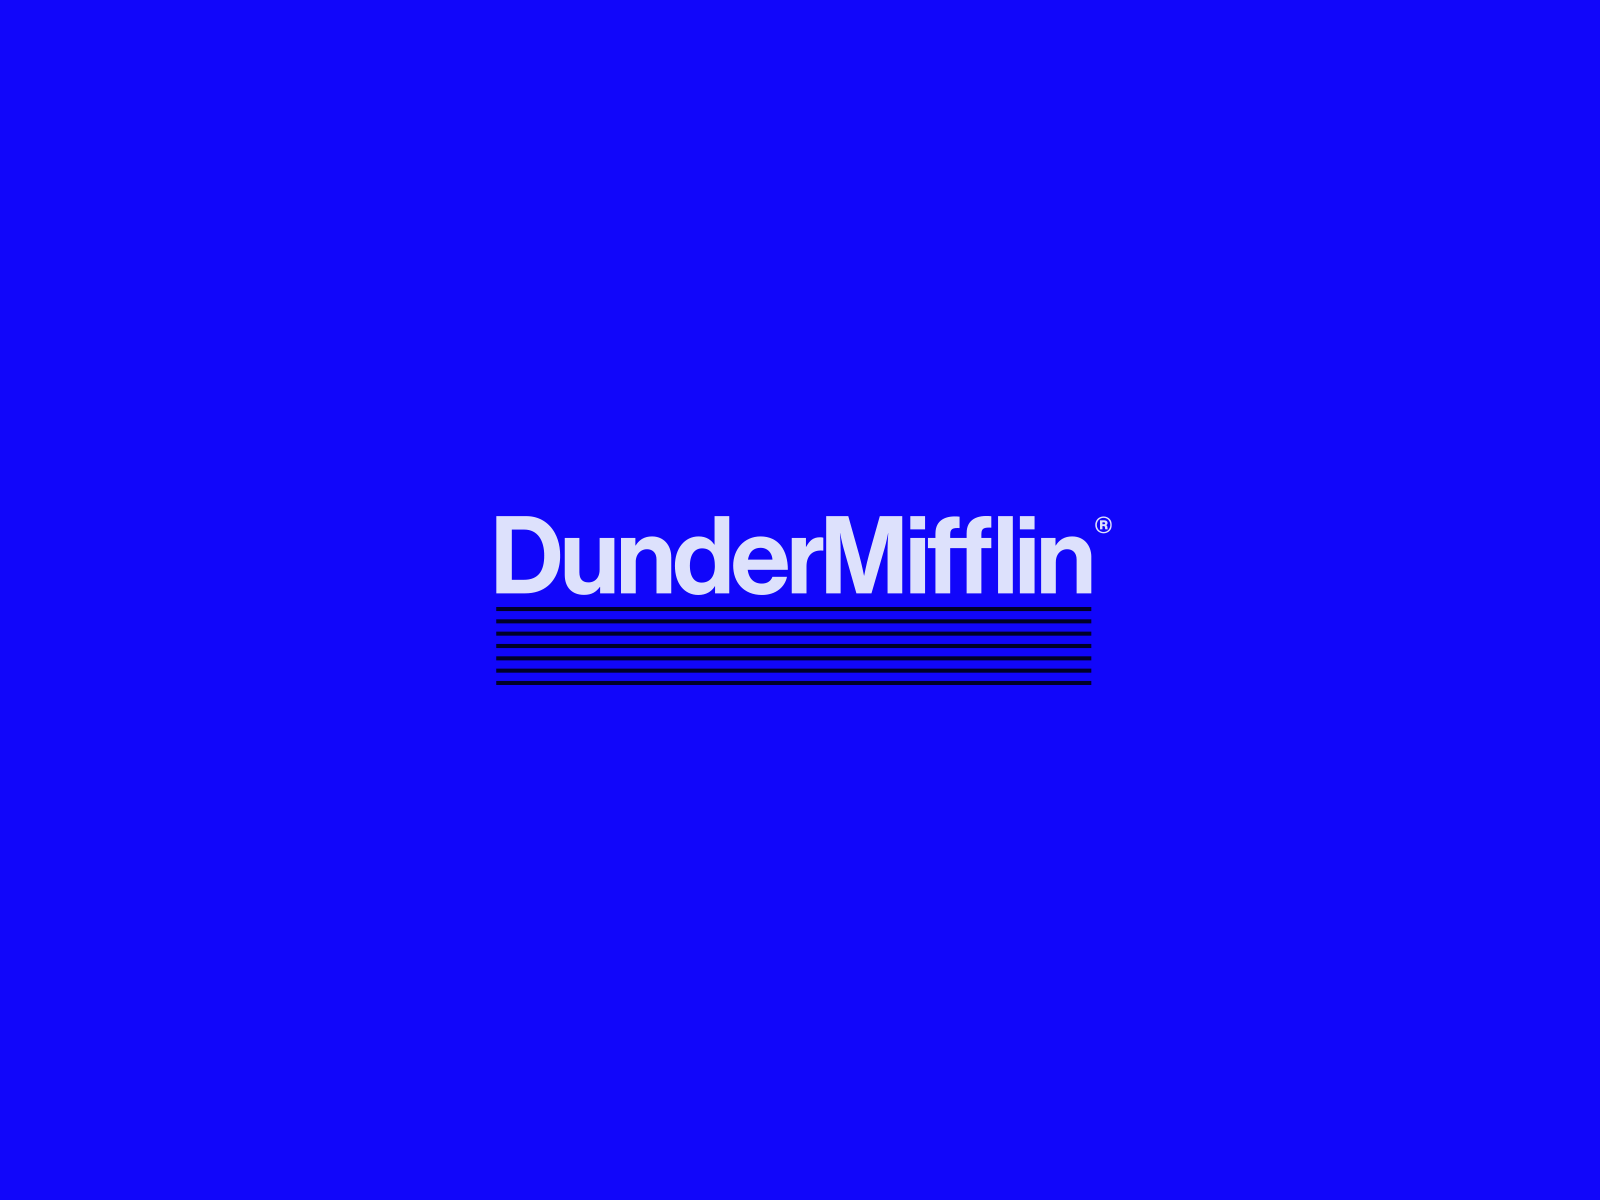 Dunder Mifflin rebranding by João Matheus on Dribbble